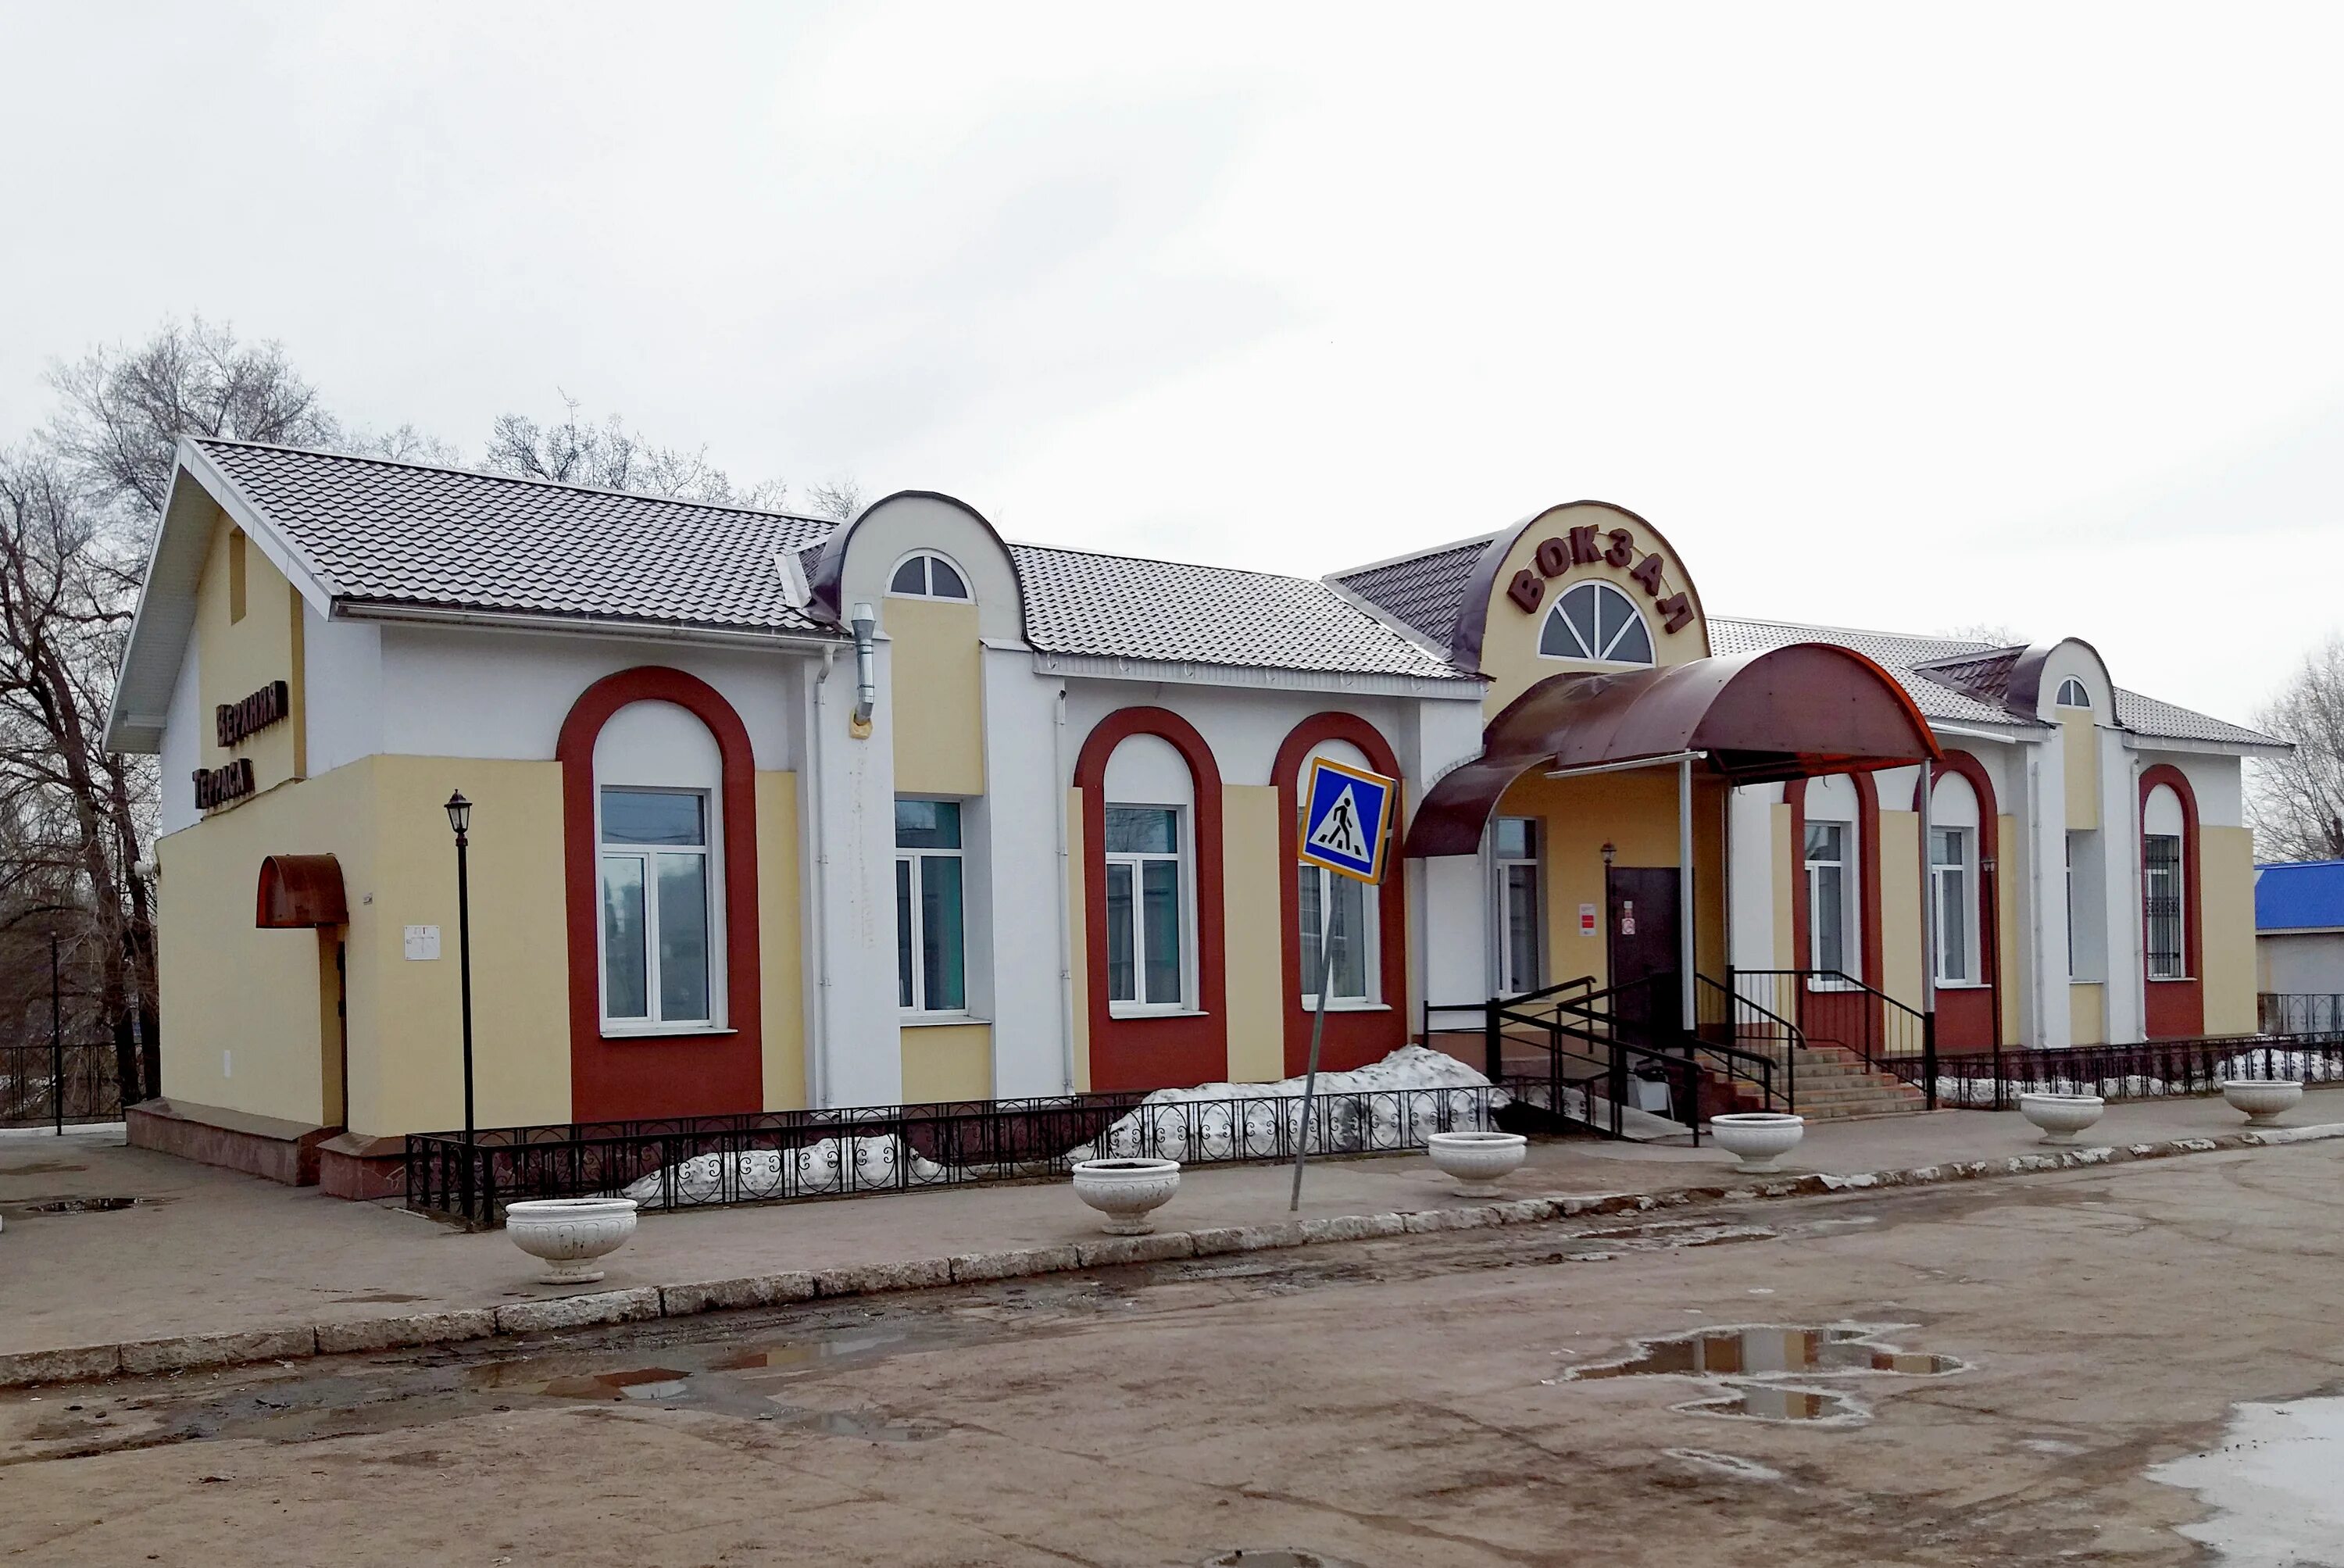 Работу верхняя терраса. Вокзал верхняя терраса. Станция верхняя терраса Ульяновск. Вокзал верхняя терраса Ульяновск. Автовокзал Ульяновск верхняя терраса.